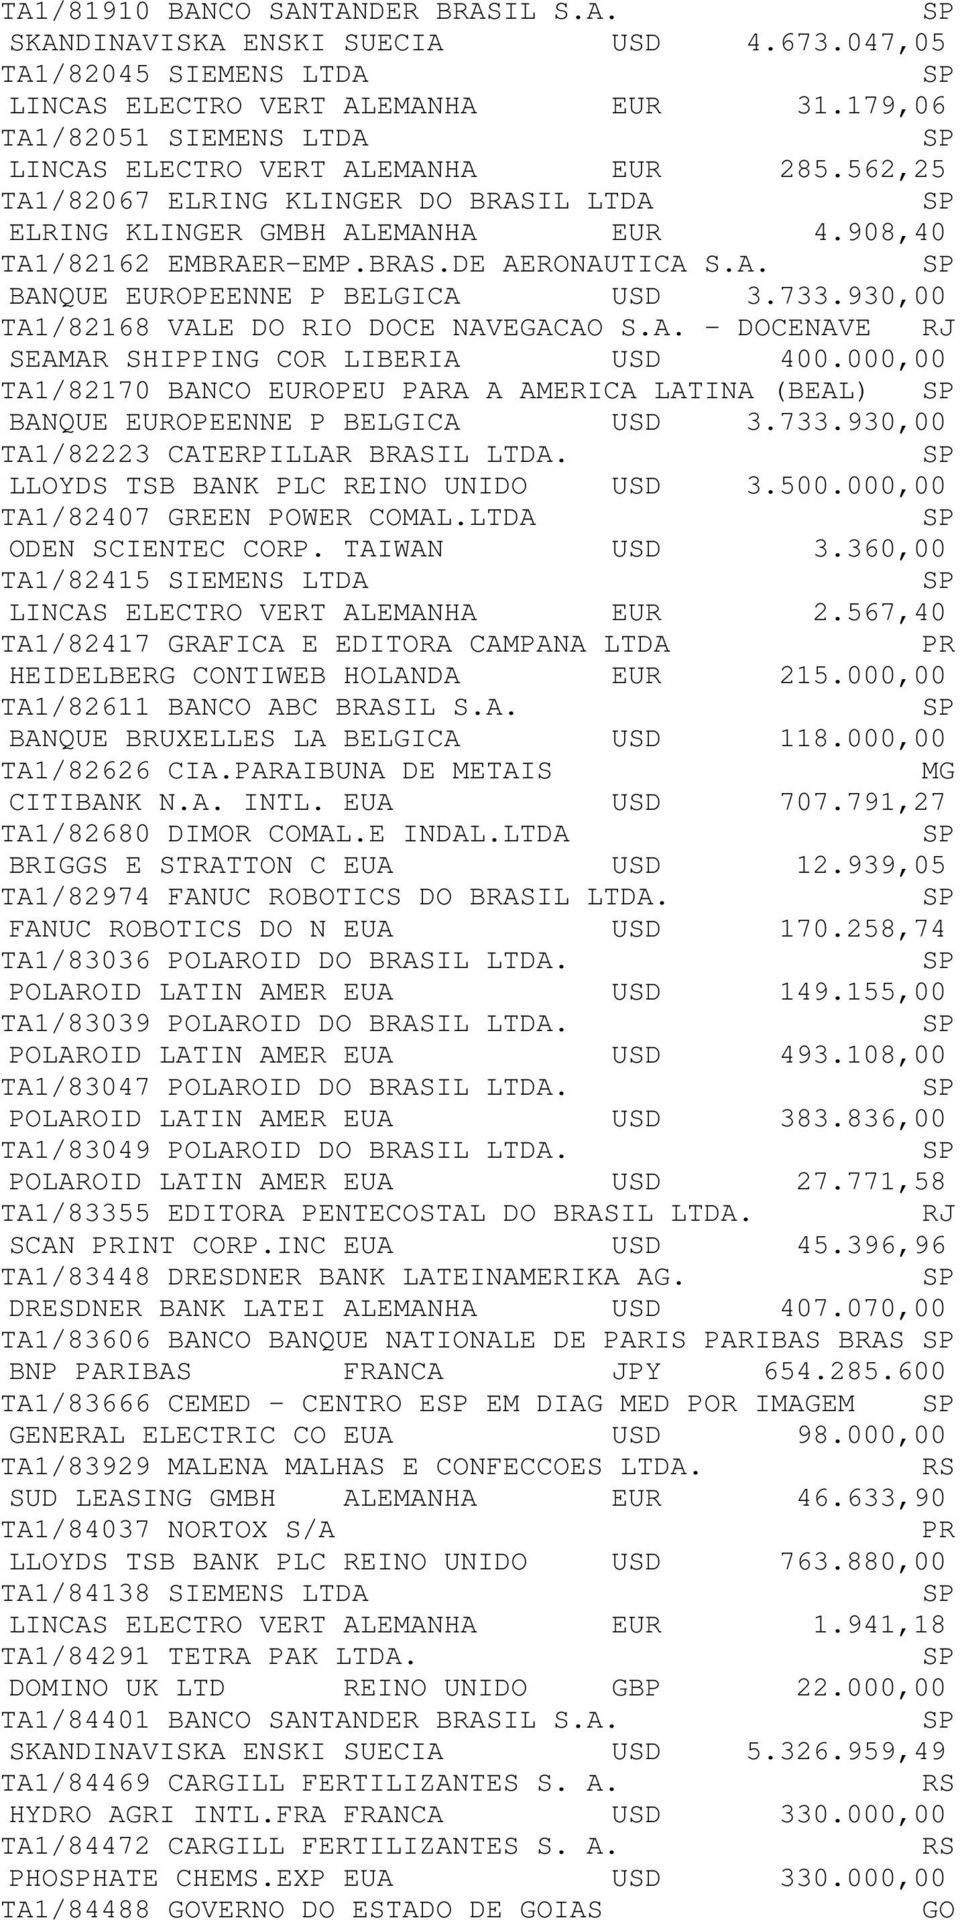 A. BANQUE EUROPEENNE P BELGICA USD 3.733.930,00 TA1/82168 VALE DO RIO DOCE NAVEGACAO S.A. - DOCENAVE SEAR SHIPPING COR LIBERIA USD 400.